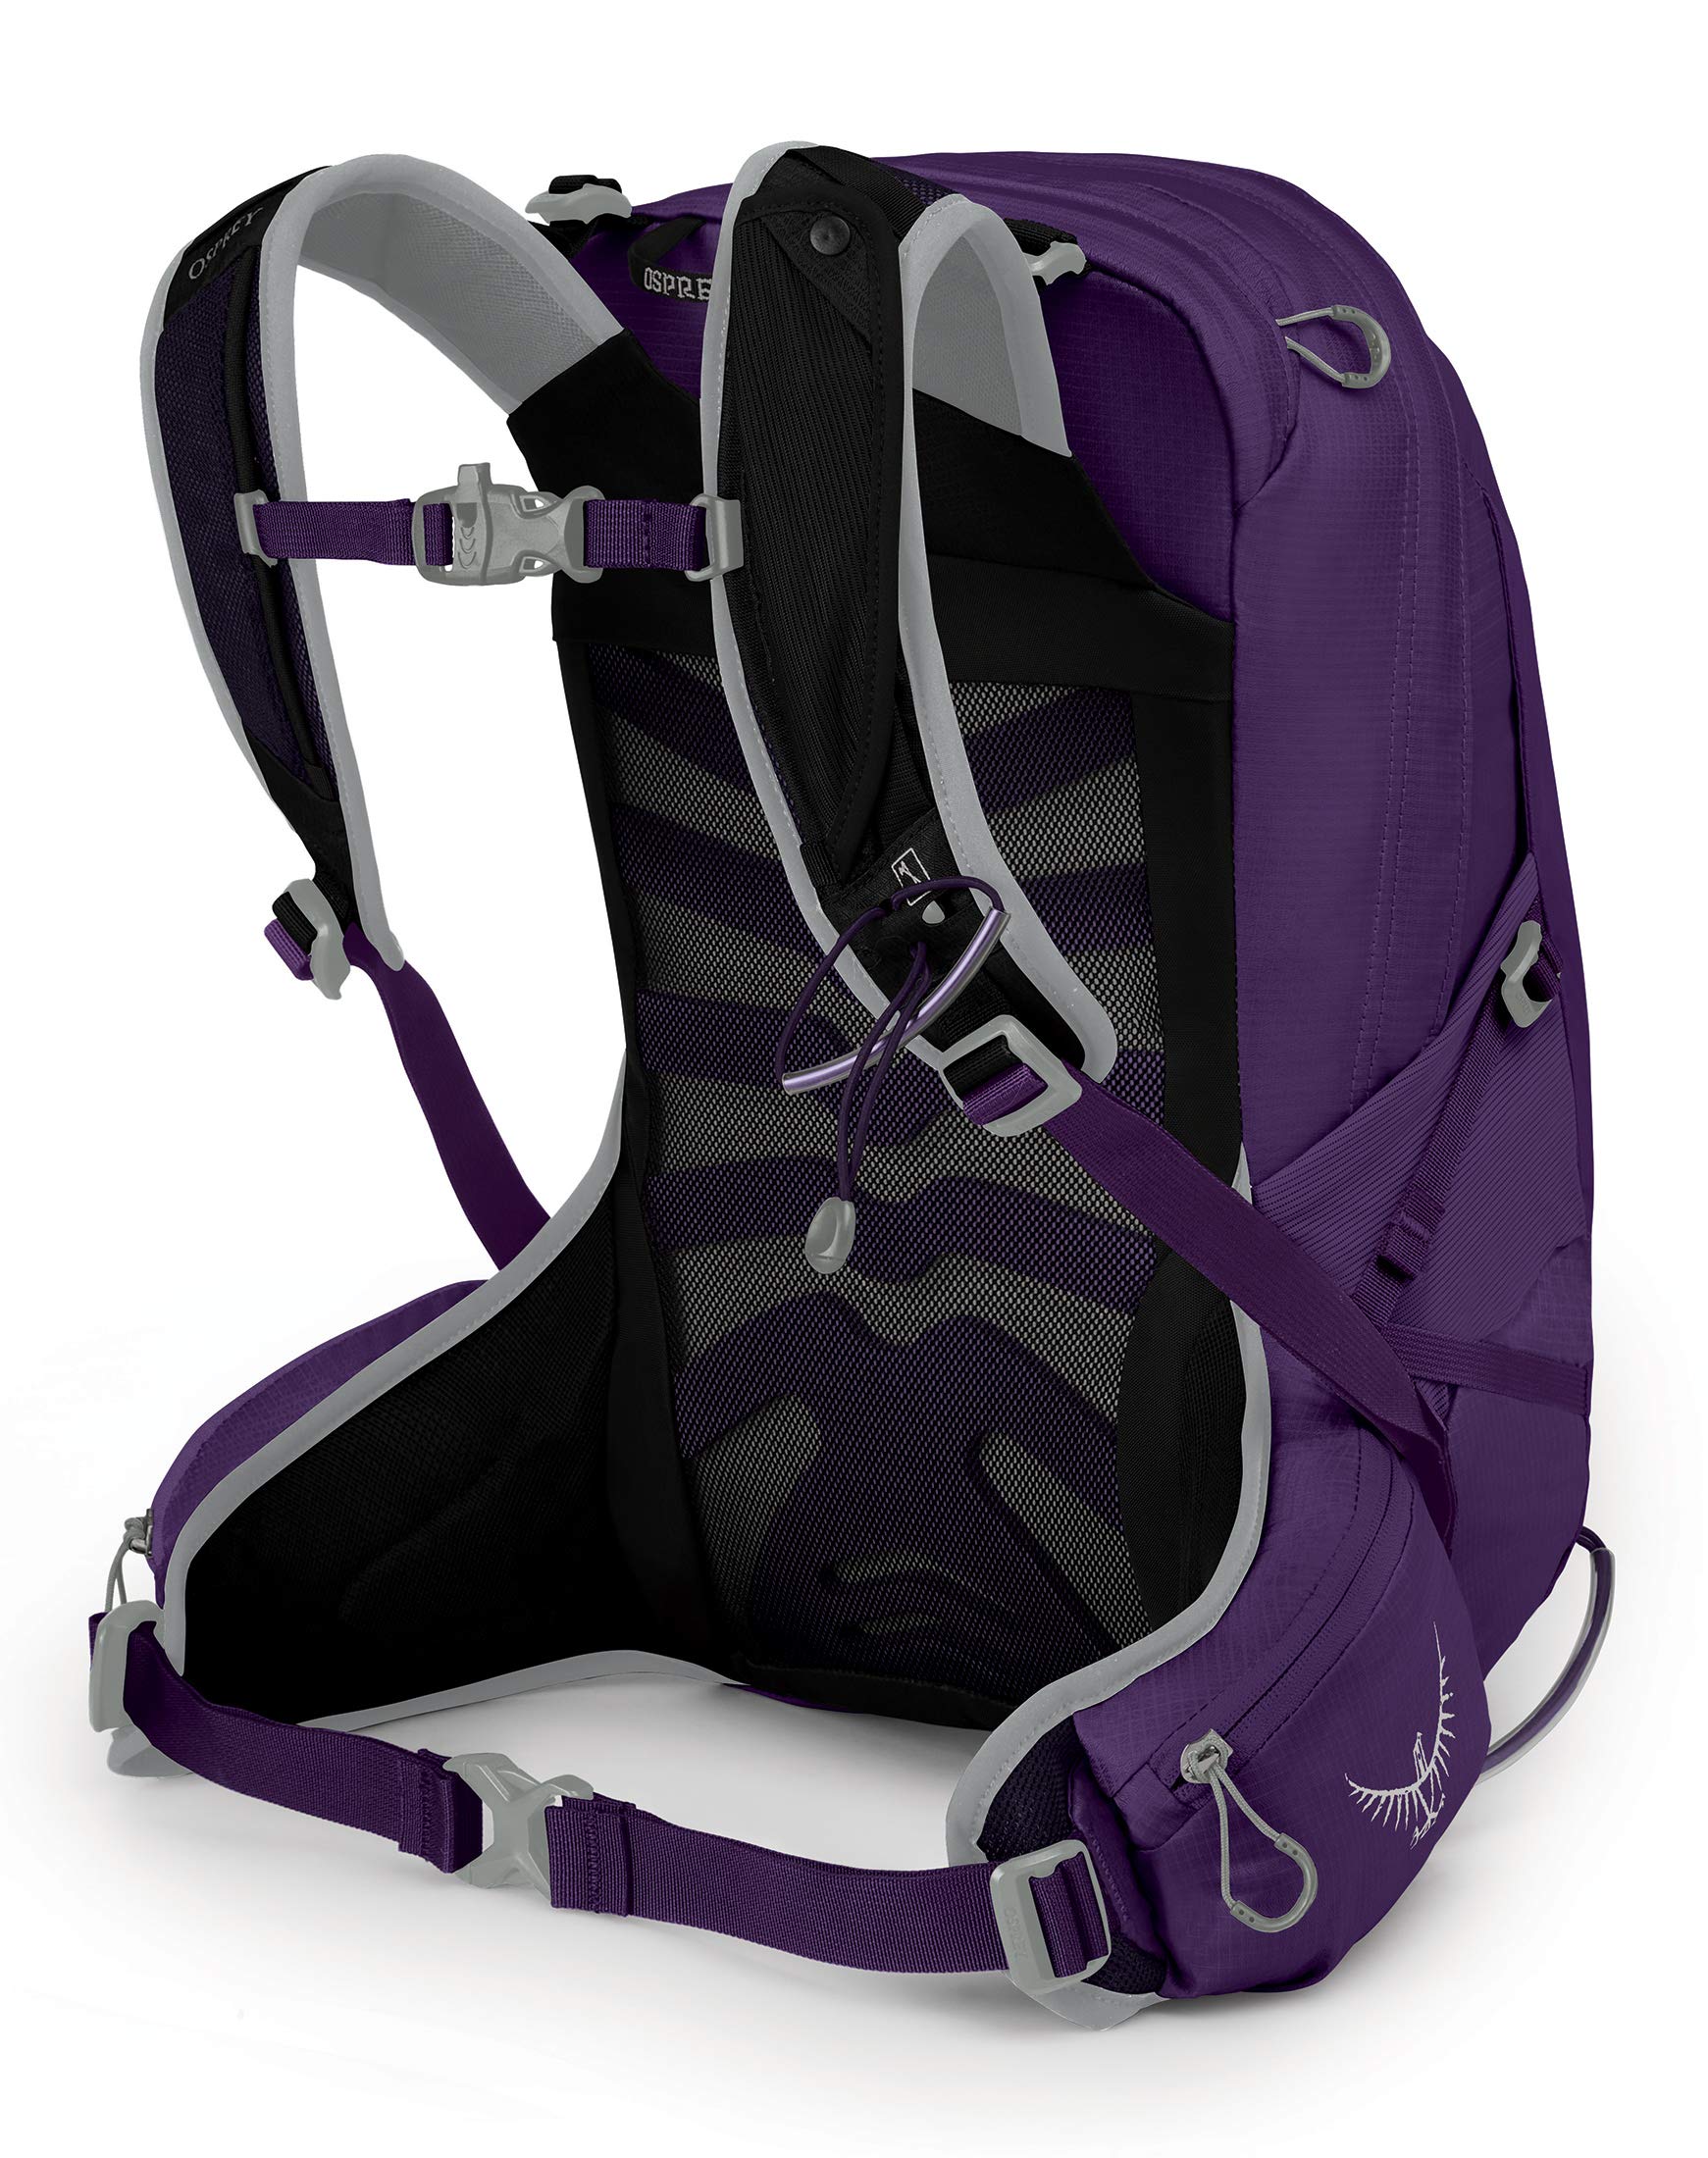 Osprey Tempest 9 Women's Hiking Backpack, Violac Purple, Medium/Large